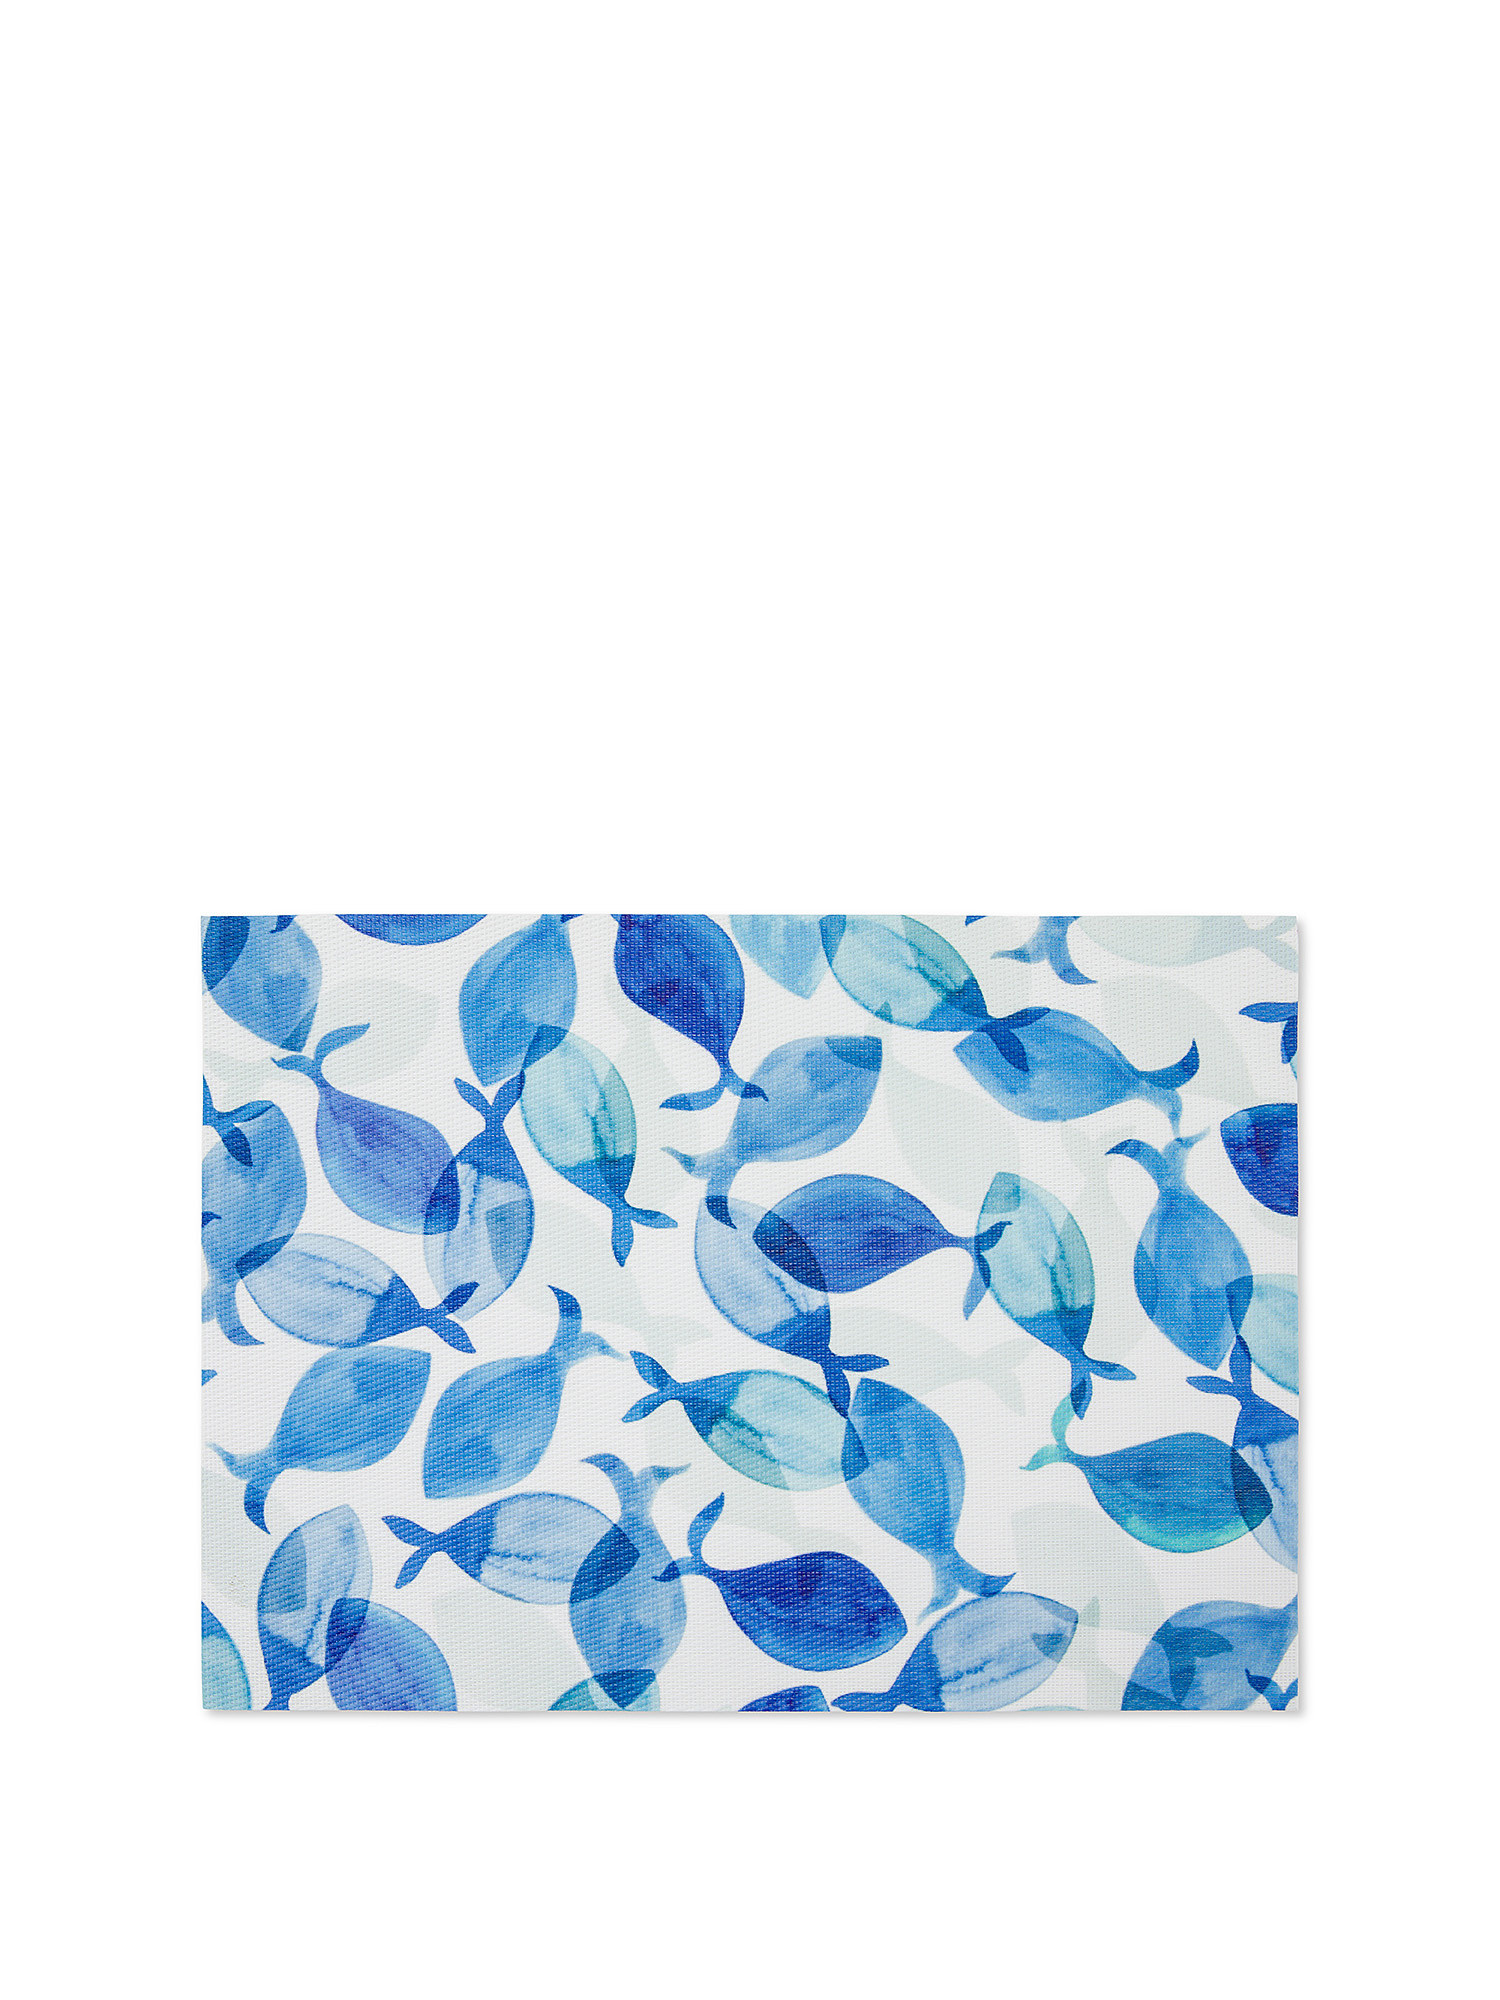 Tovaglietta PVC stampa pesci, Blu, large image number 0